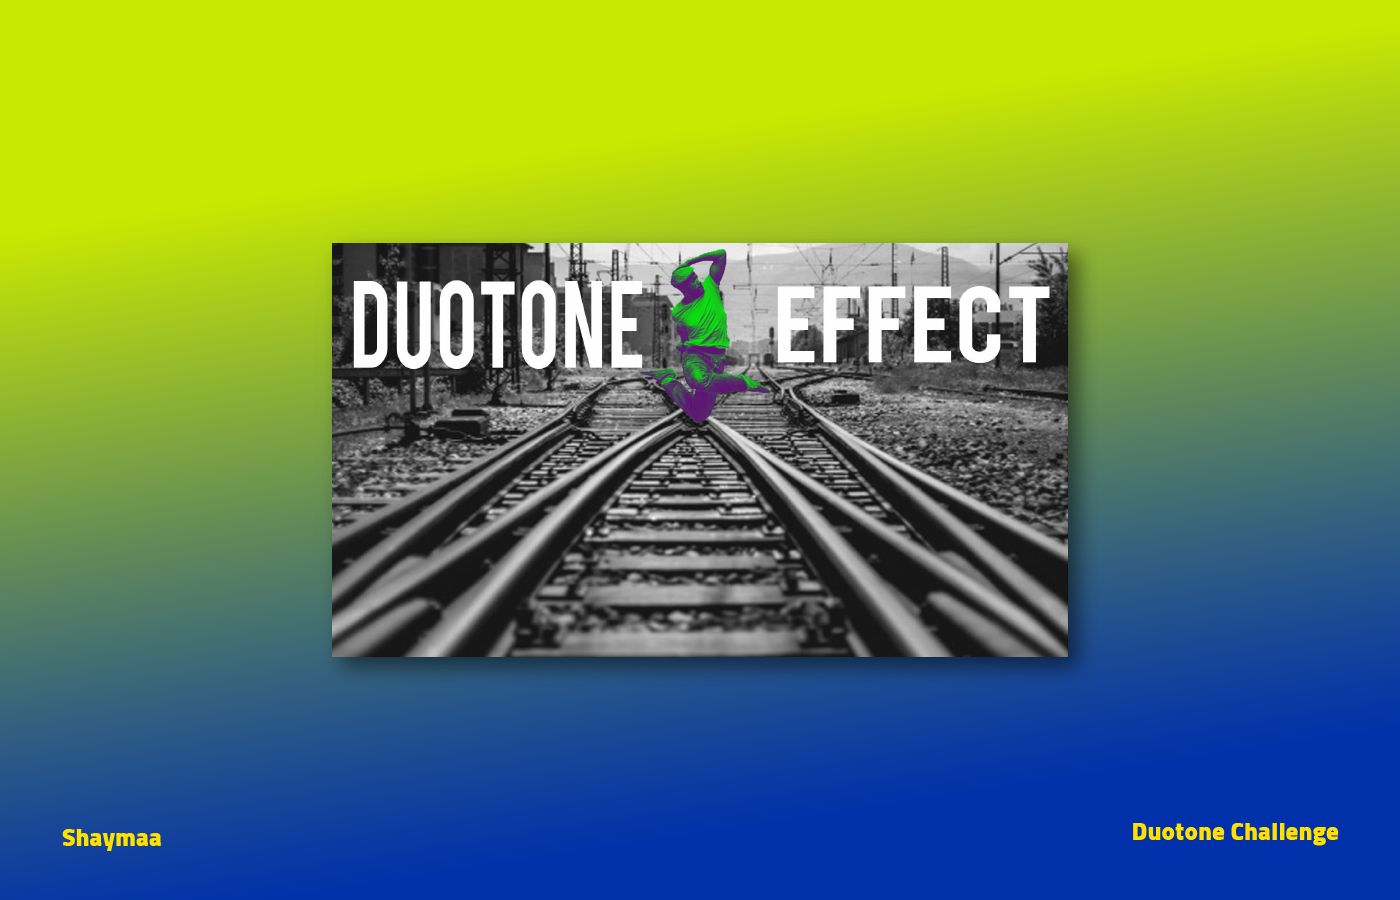 duoton Duotone duotone effect design challenge تحديات الزبدة الدوتون تأثير